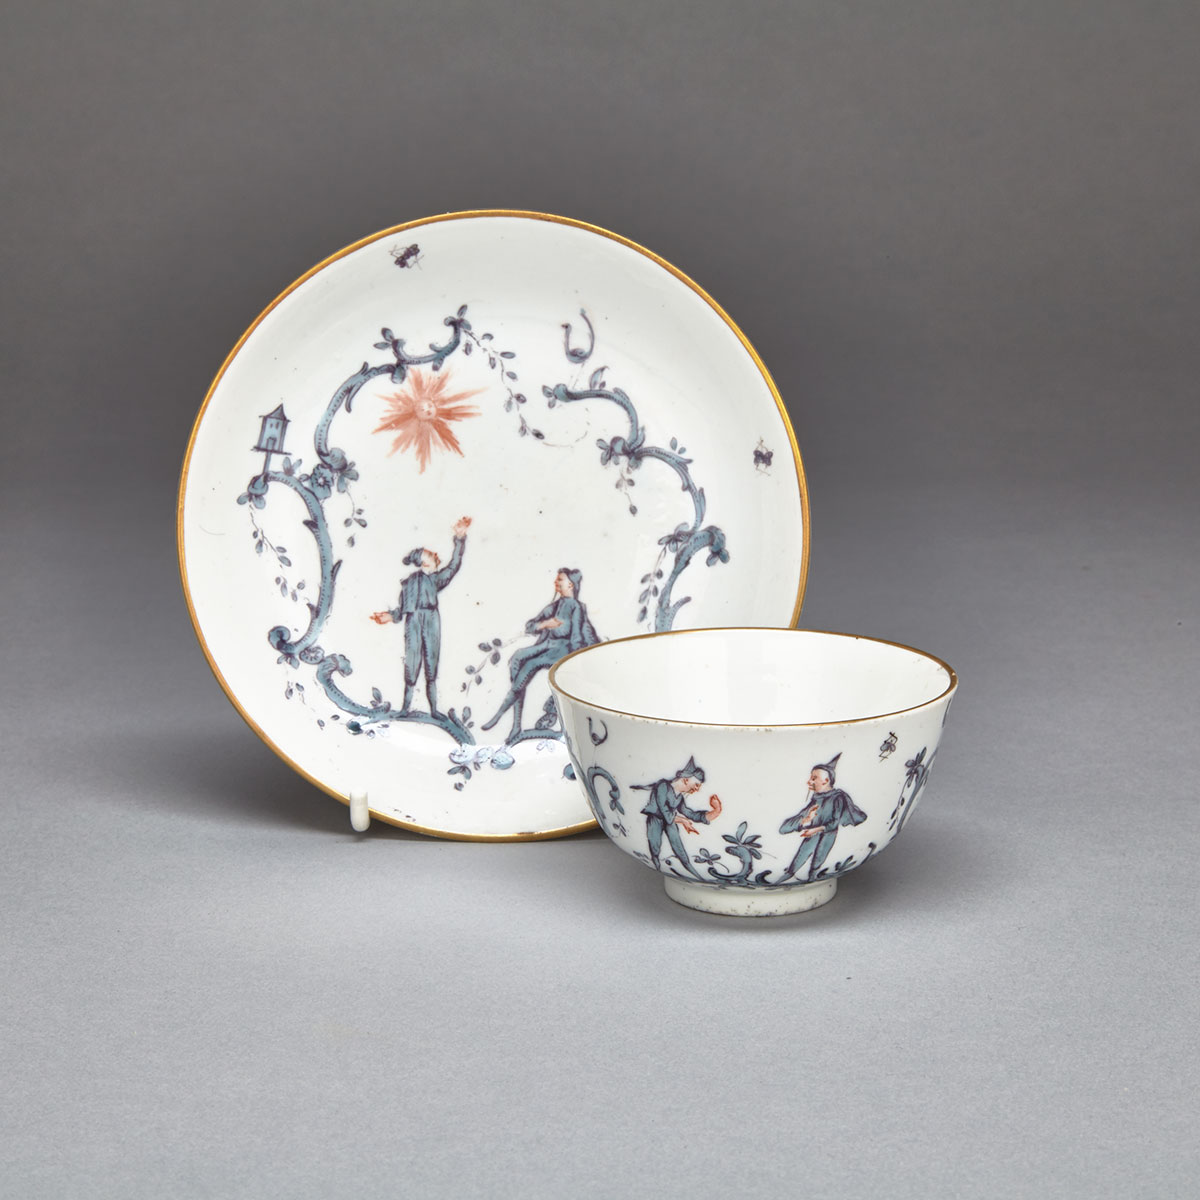 Venice (Cozzi) Chinoiserie Tea Bowl and Saucer, c.1770